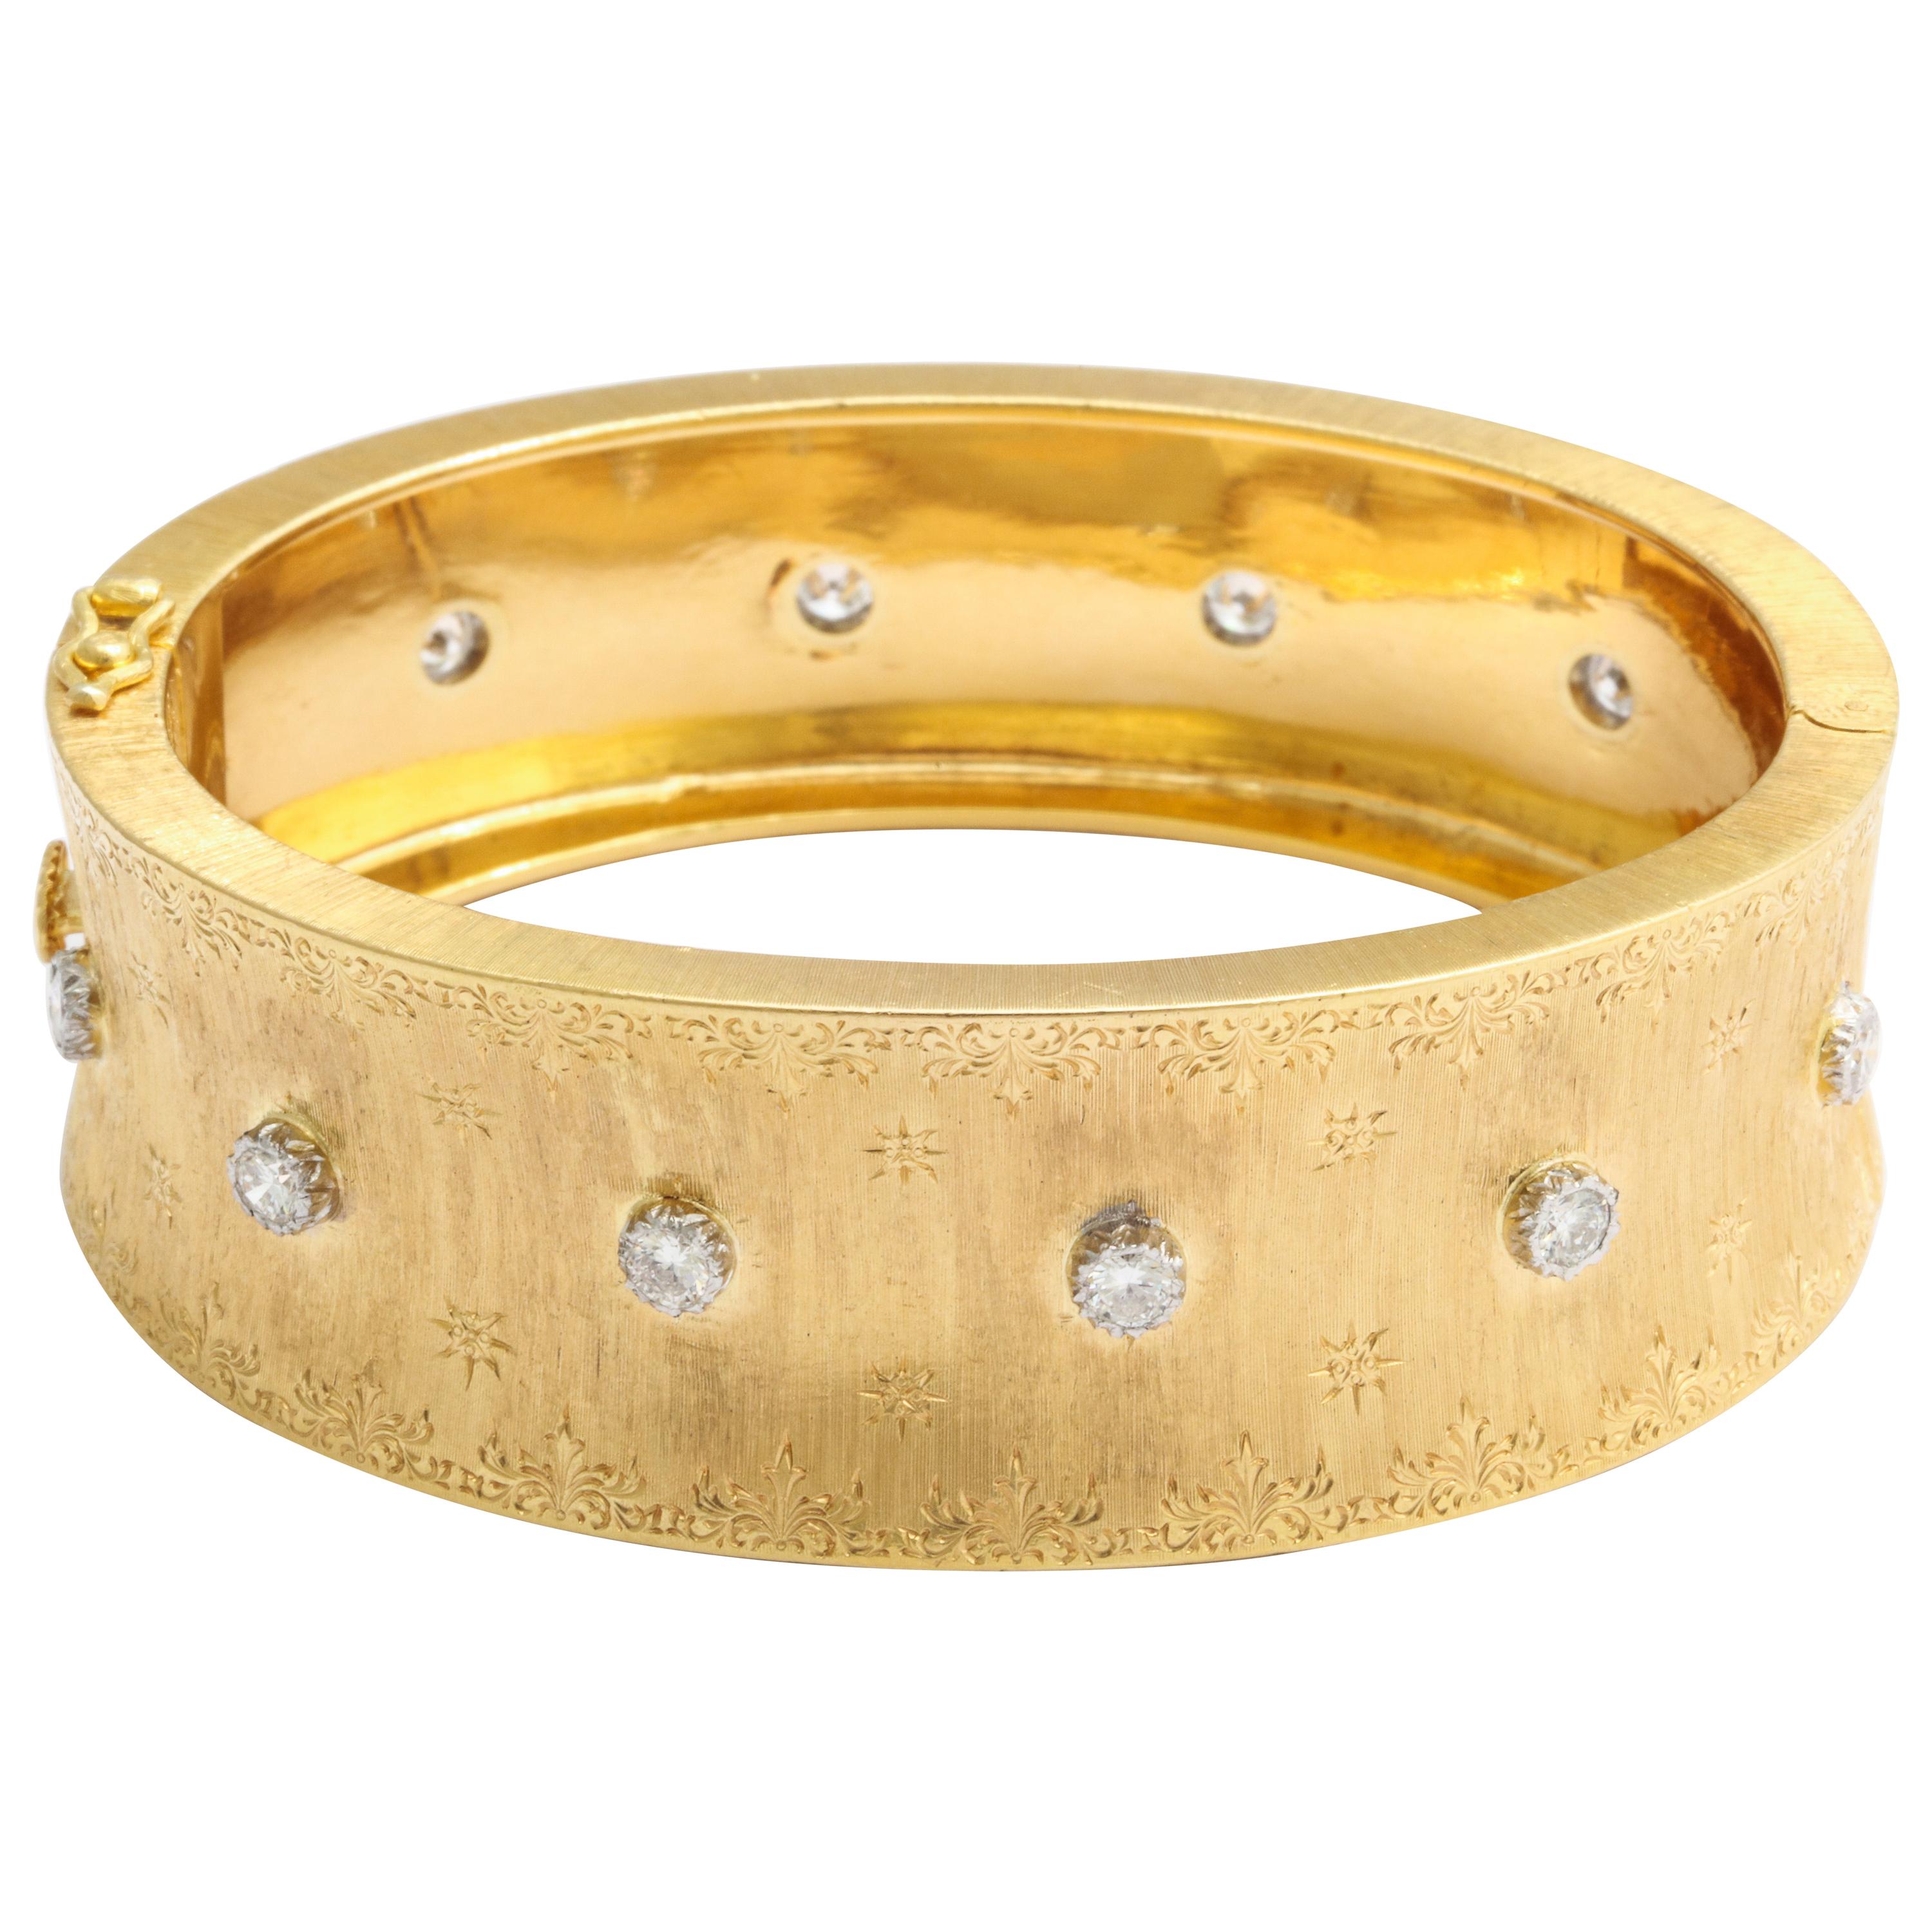 Mario Buccellati 18 Karat Yellow Gold and Diamond Bangle Bracelet, circa 1970s For Sale